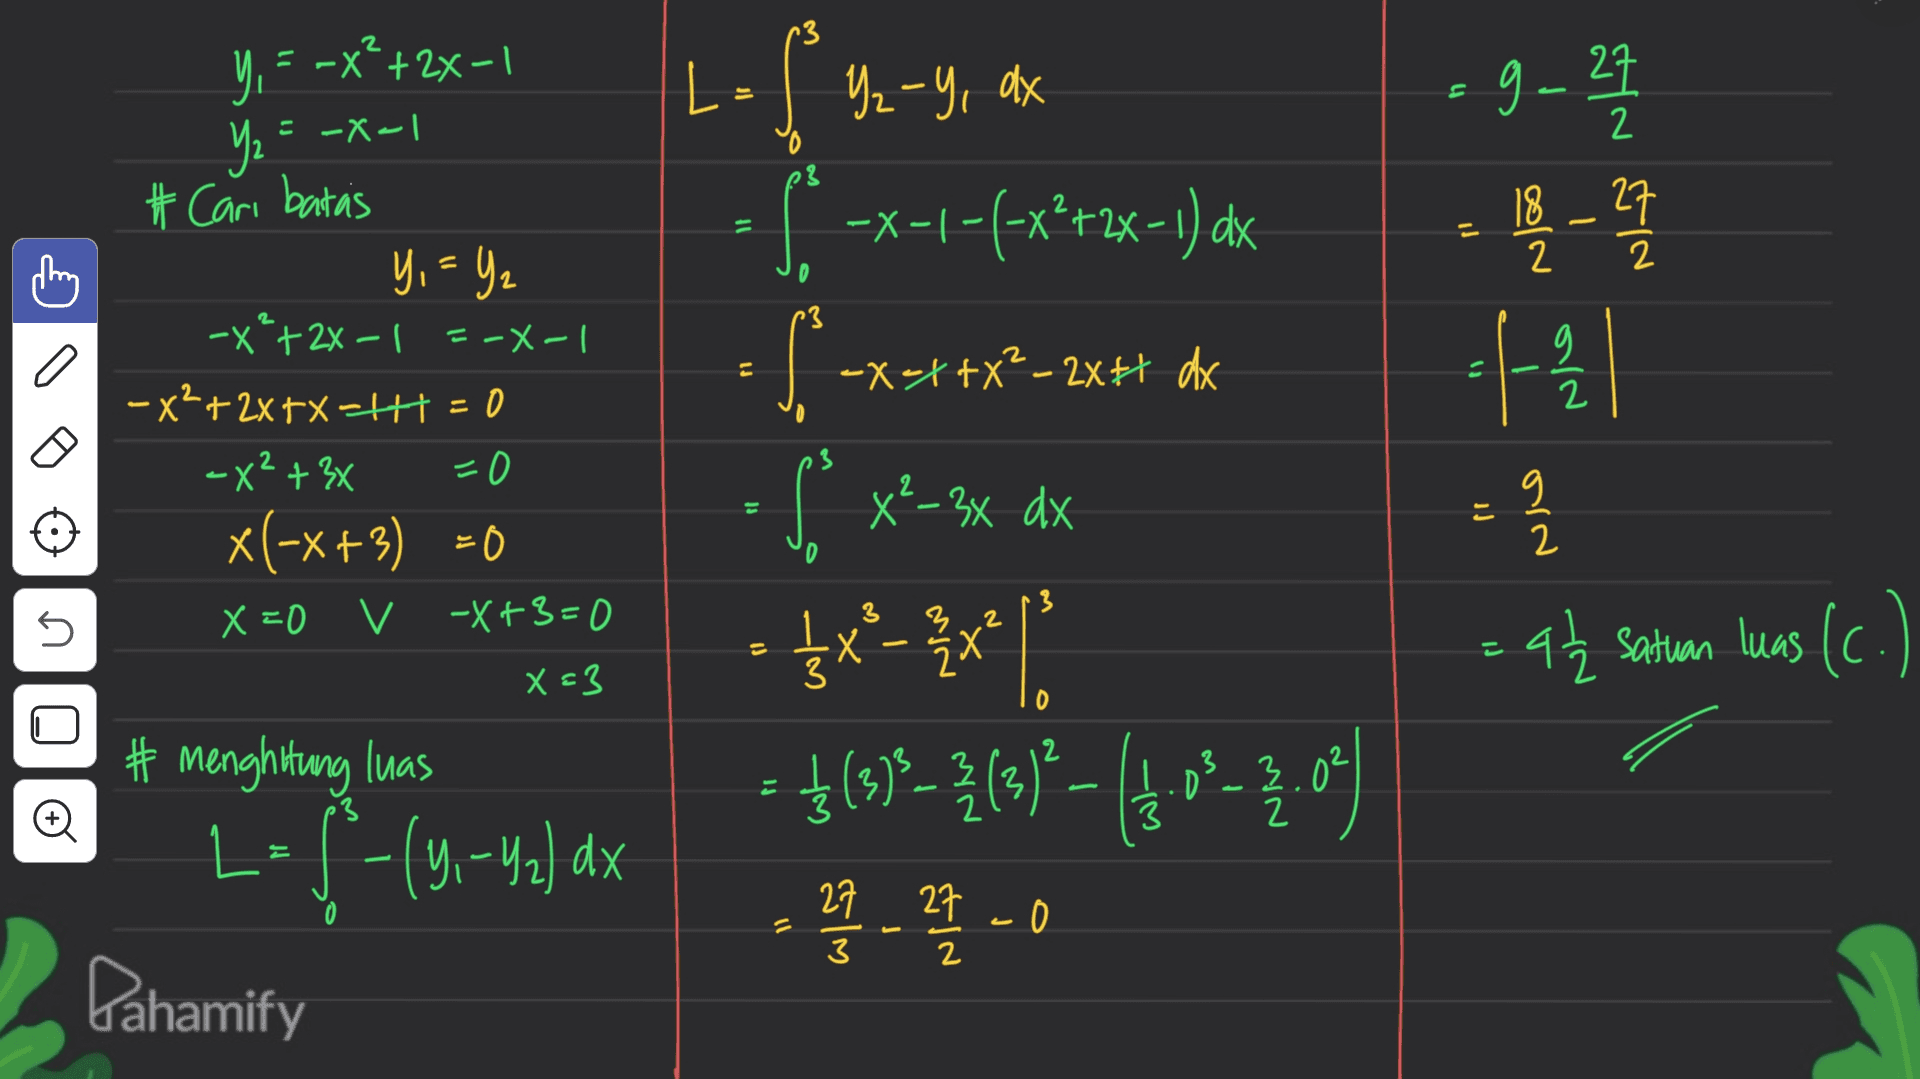 2 YE = -x + 2x-1 - LE Yz-y, dx = Yz = -x-1 # Cari batas 라 11 thing 2 a -X=X+X² - 2x dx Nho g. 27 - 18 - 27 =( ㅏ을 - a = at2 satuan luas (c. ) g 2 -'y-y, S. -x-1-(-x*+2x-1) dx Si f. x²-3x dx • £x*-***]. = $(99–2(3)- 4:18-2.0) - 끝 - - 0 Y, = 4₂ -X'+2x – 1 = -X-1 -x2+2xtxth = 0 -X²+3x = 0 x x(-x+3) =0 X=0 V -X+3=0 X=3 # menghitung luas = 는 2 3 3 2 s 1 x 3 ) | 3.0² Ø 3 3 z L-4-(41–4) dx y- 27 0 27 3 2 Dahamify 